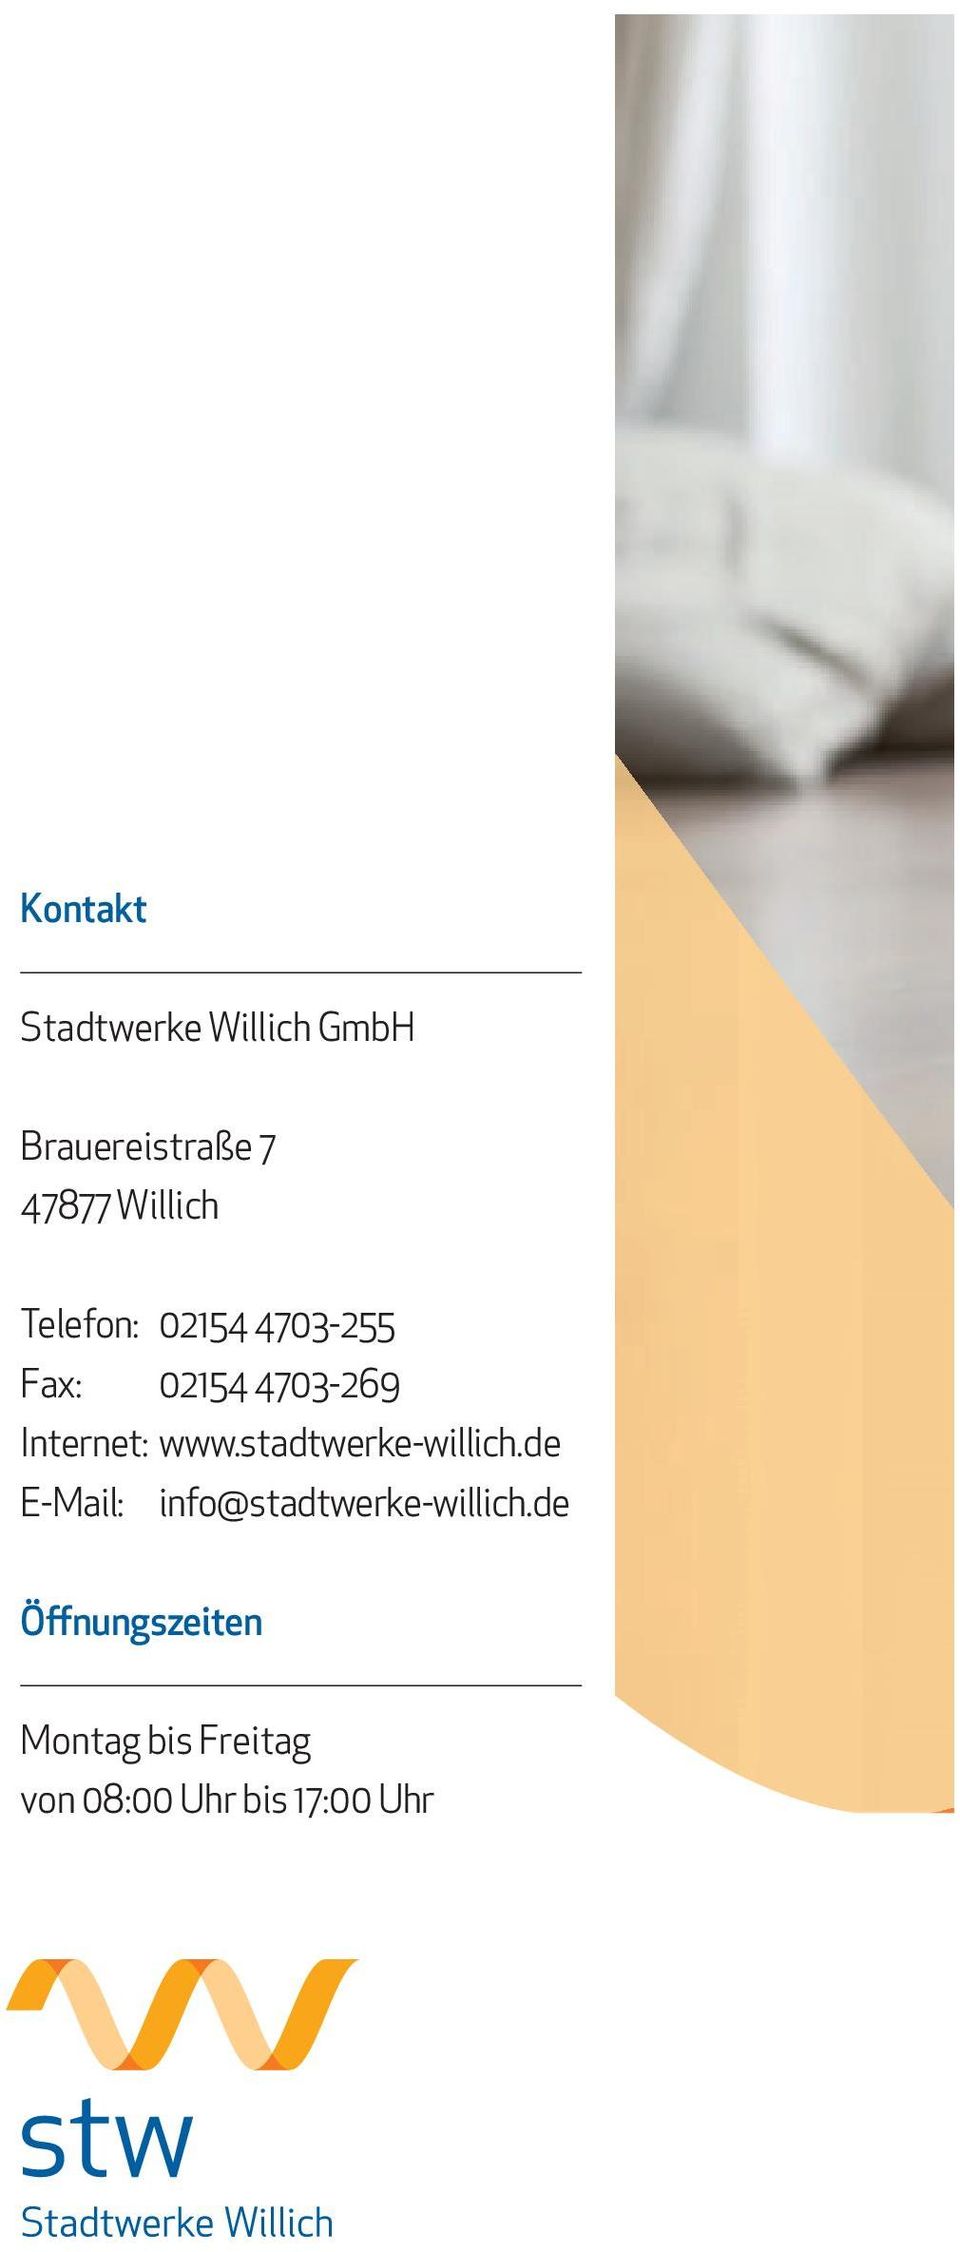 Internet: www.stadtwerke-willich.